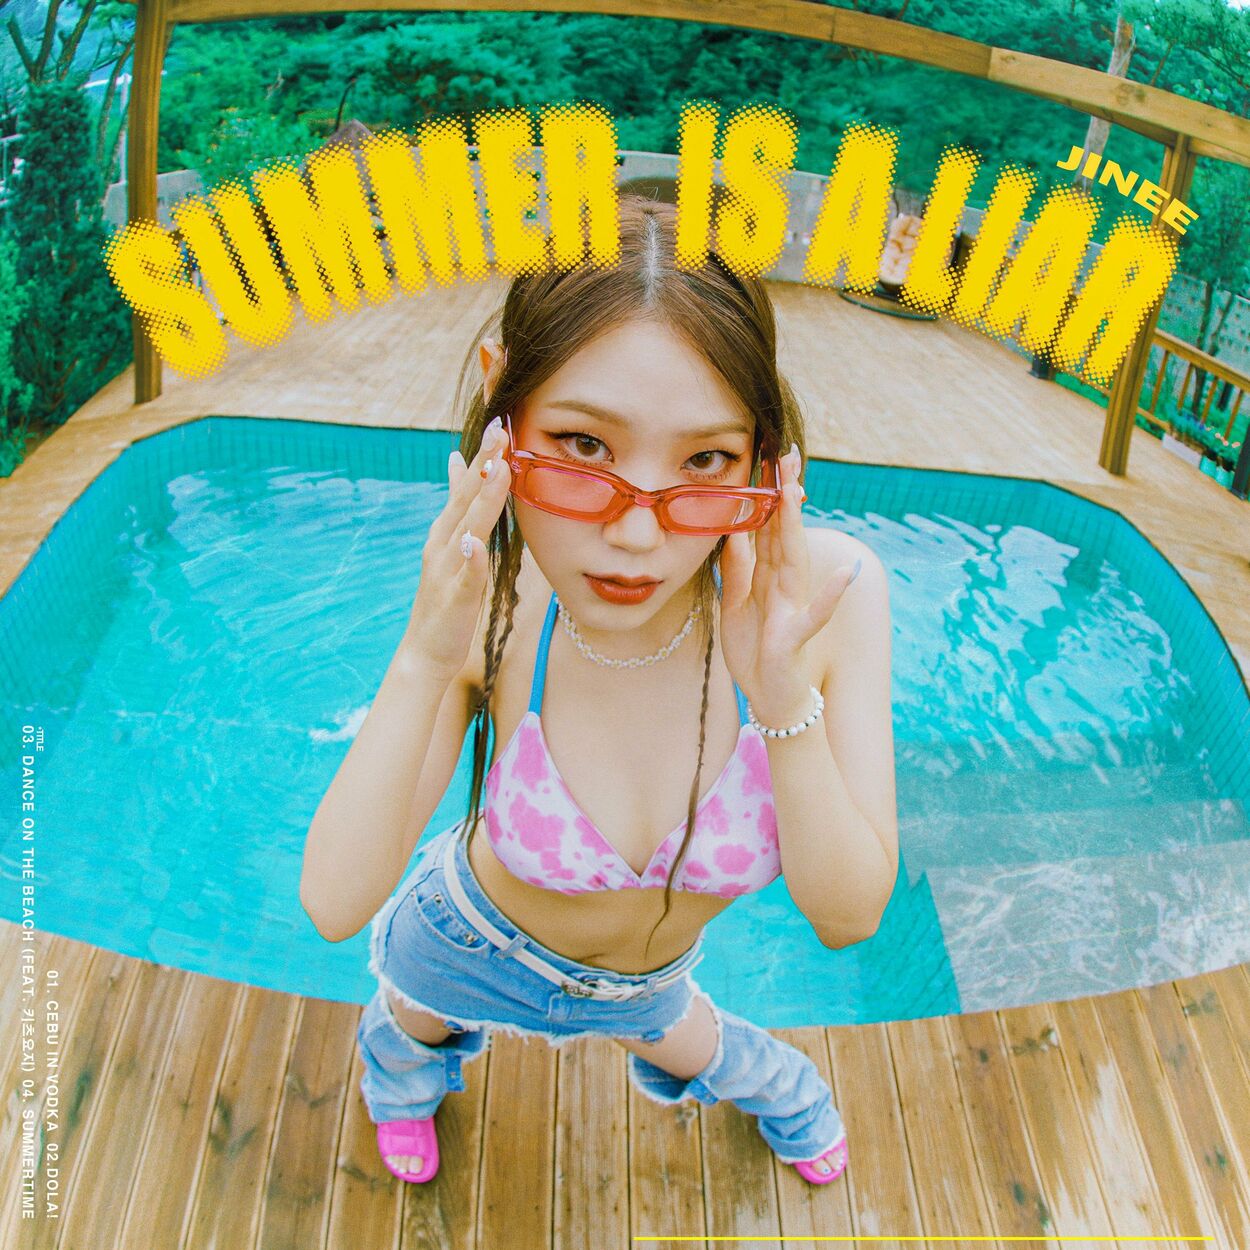 Jinee – Summer is a liar – EP